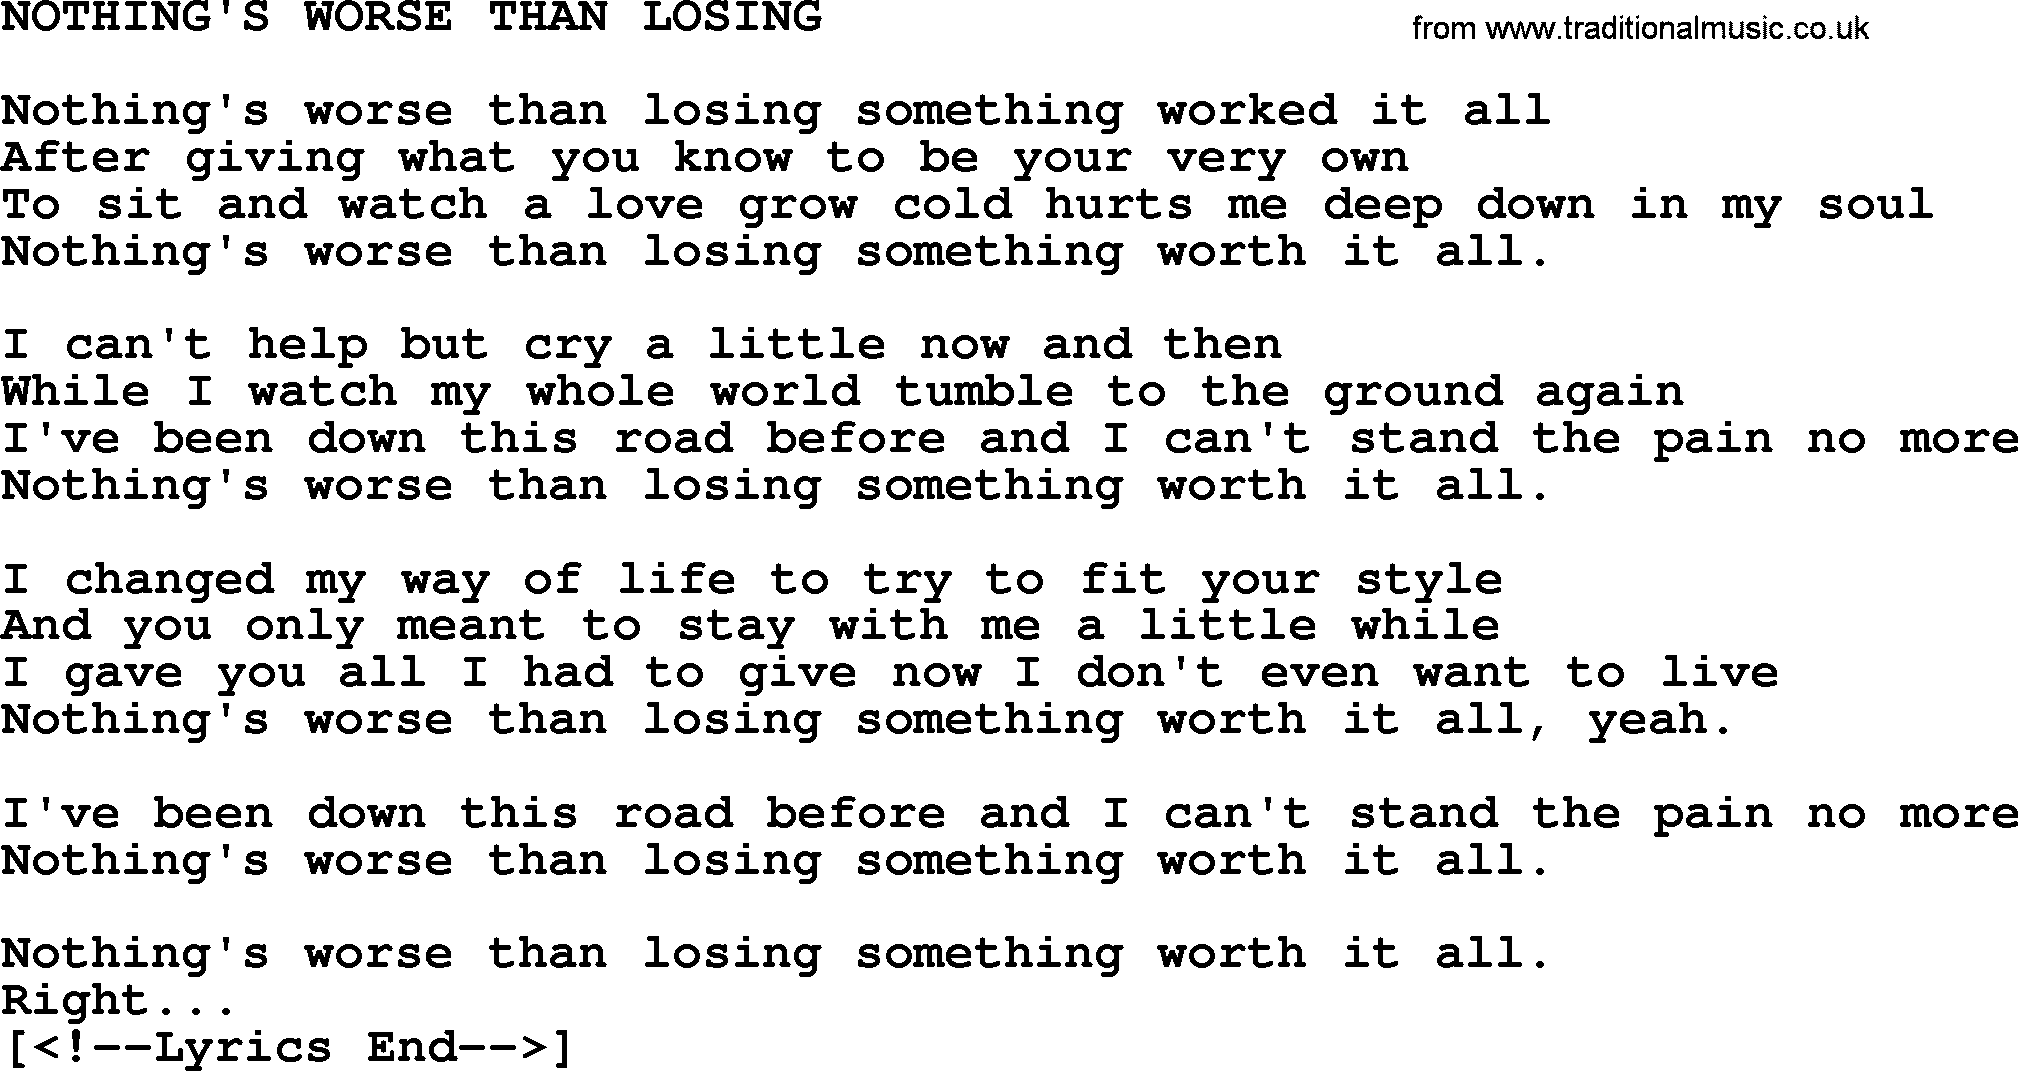 Merle Haggard song: Nothing's Worse Than Losing, lyrics.